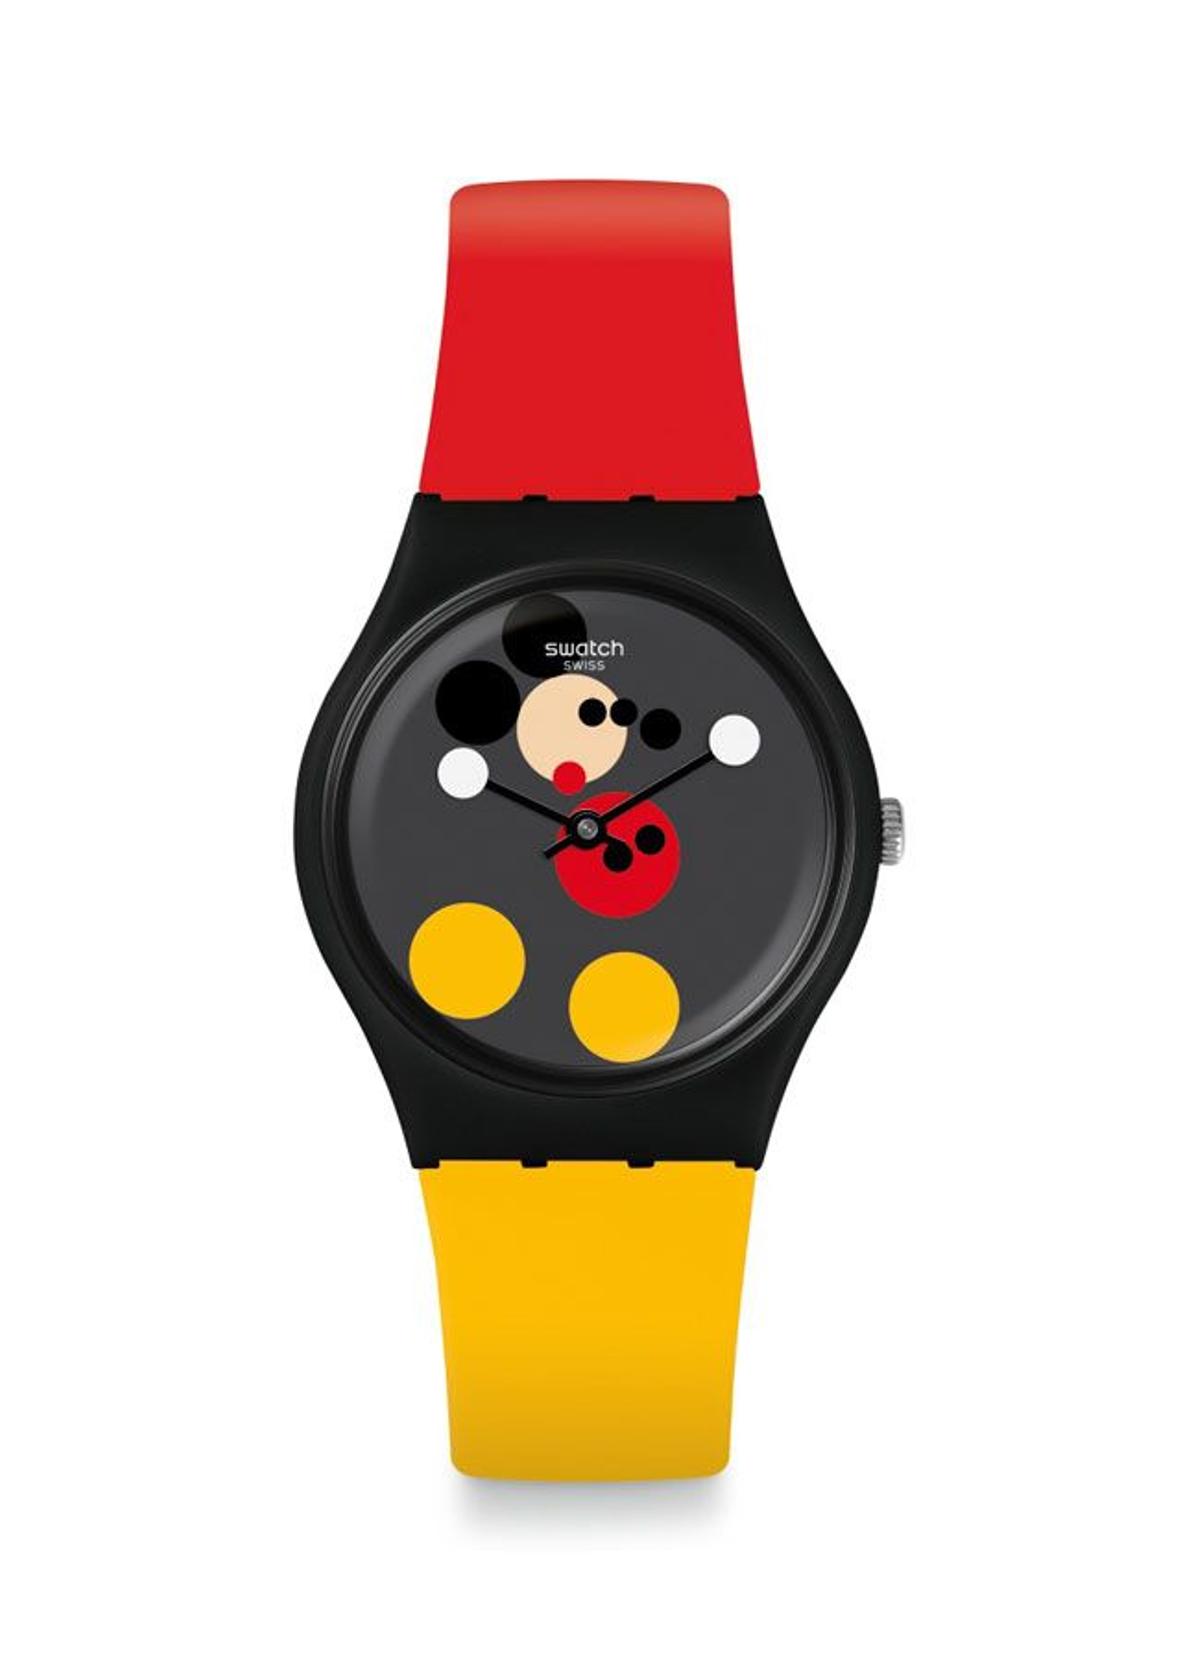 Diseño Mickey Mouse de Swatch